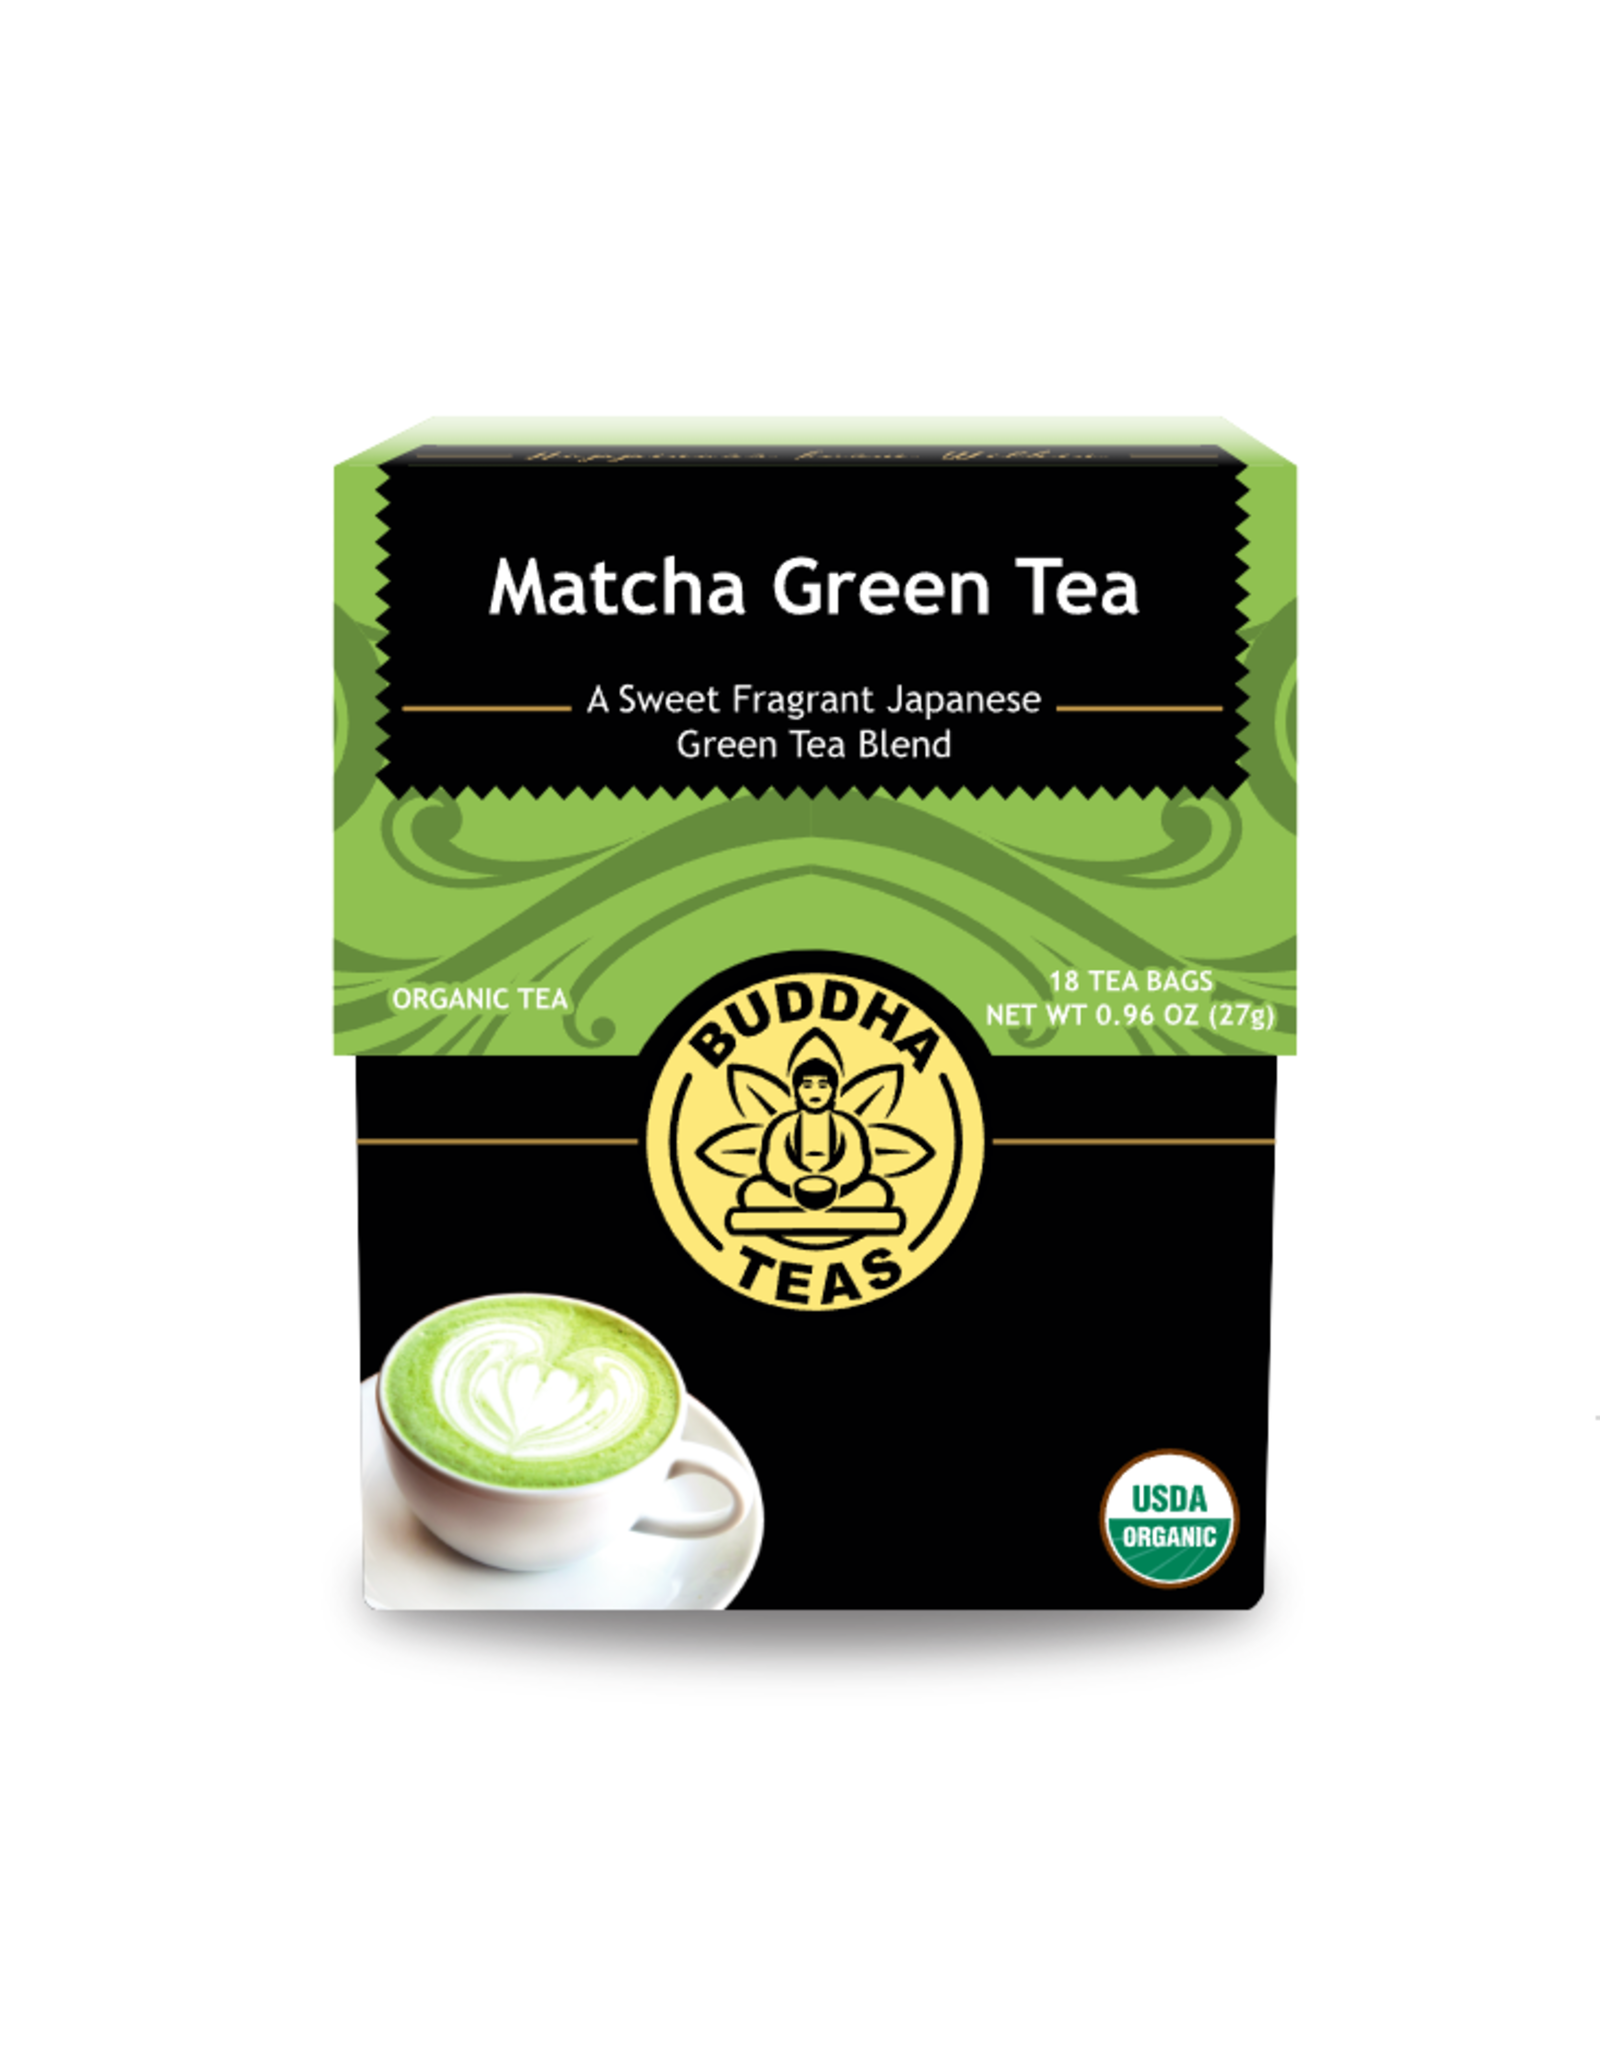 Buddha Teas Matcha Green Tea x 18 Tea Bags